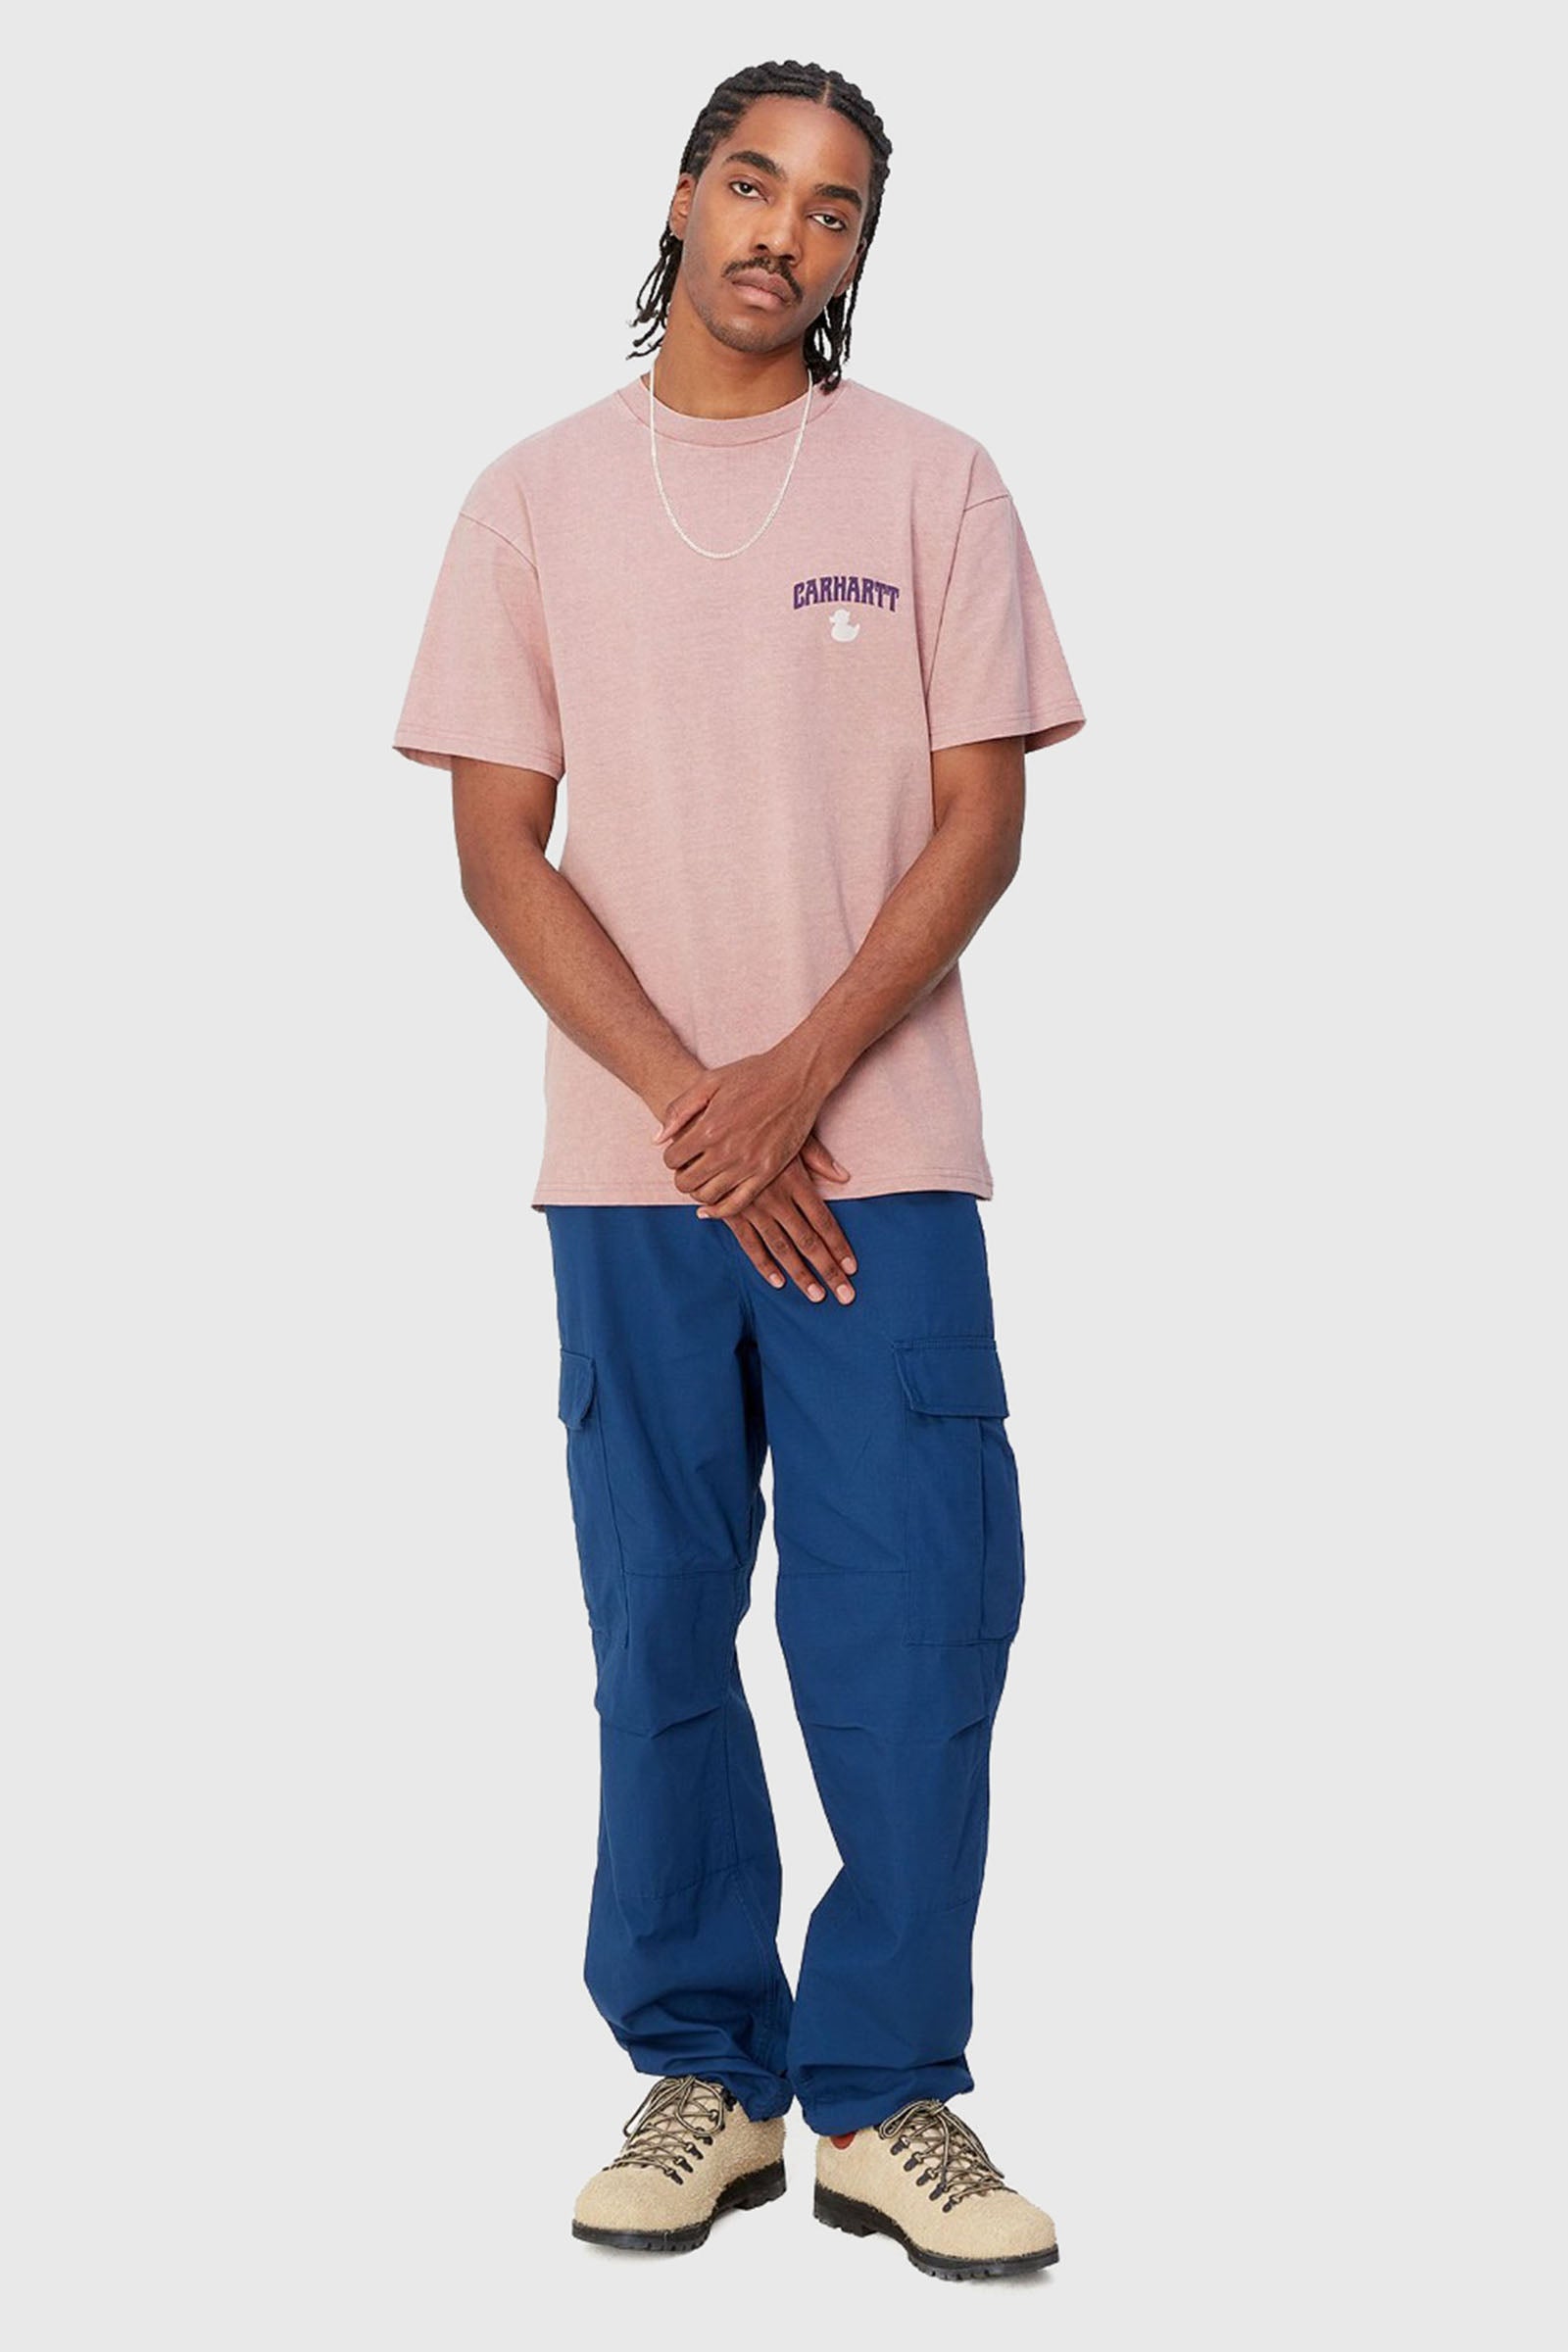 Carhartt Wip T-shirt Short Sleeve Duckin' Rosa Antico Uomo - 3